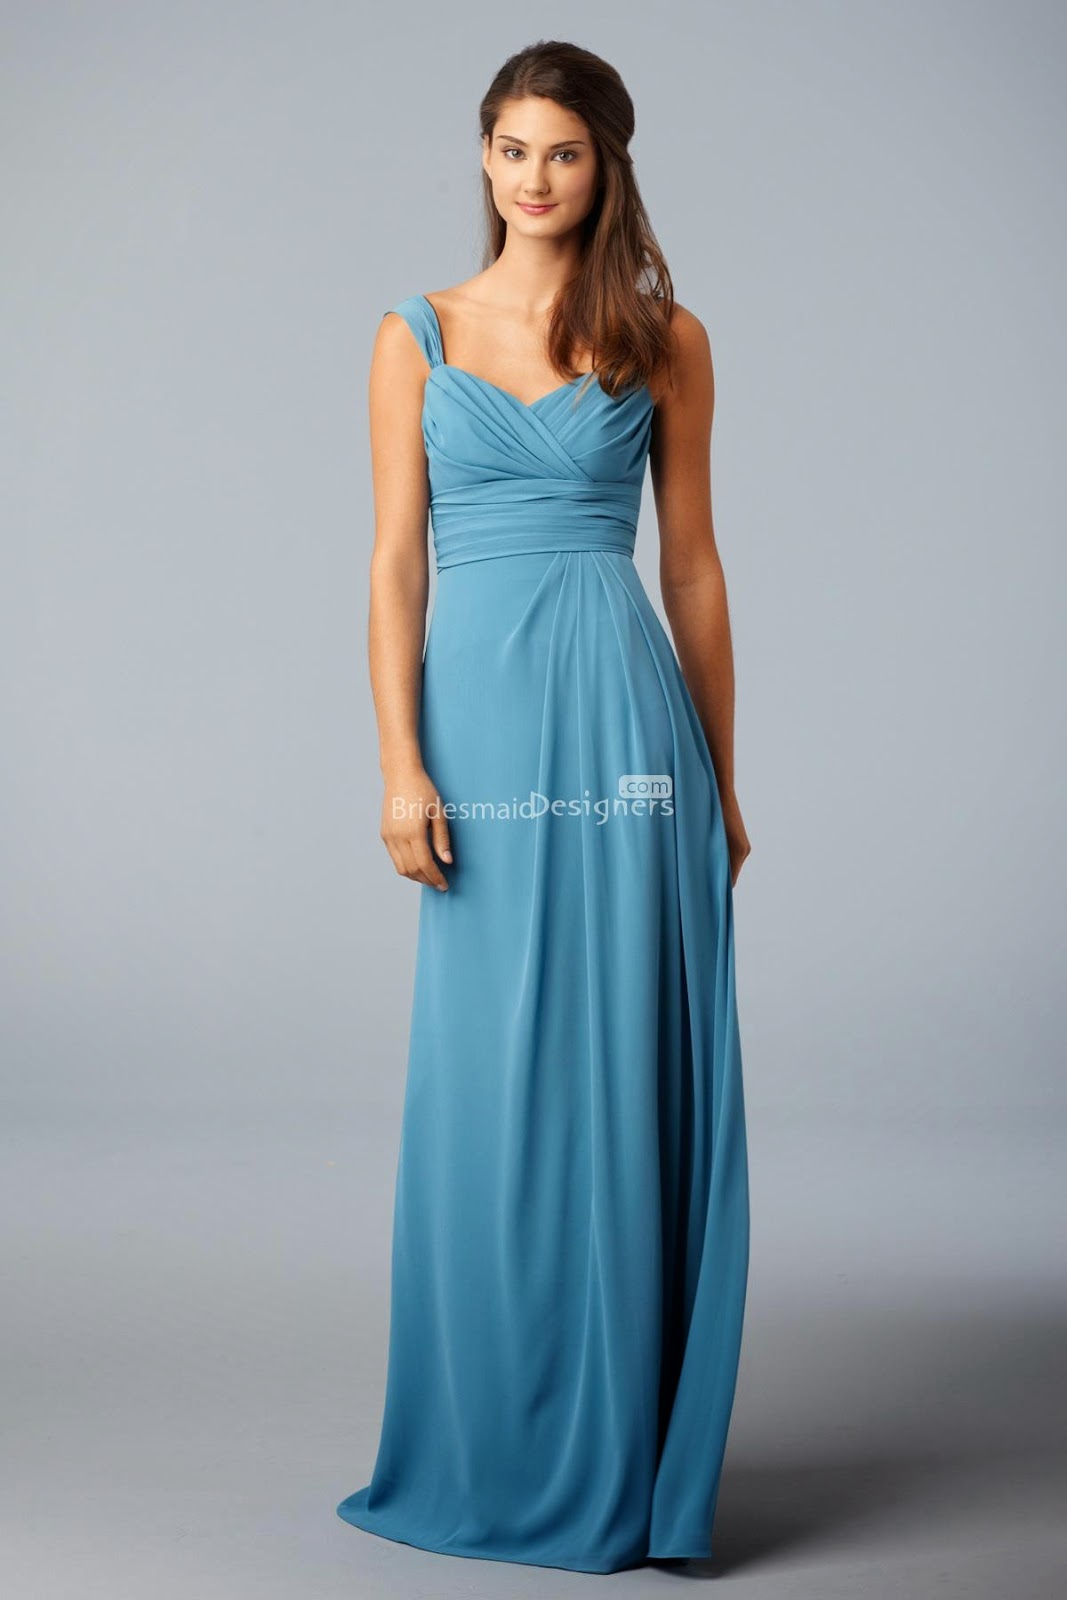 http://www.bridesmaiddesigners.com/gorgeous-blue-empire-cap-sleeve-sheath-floor-length-pleated-chiffon-bridesmaid-dress-438.html